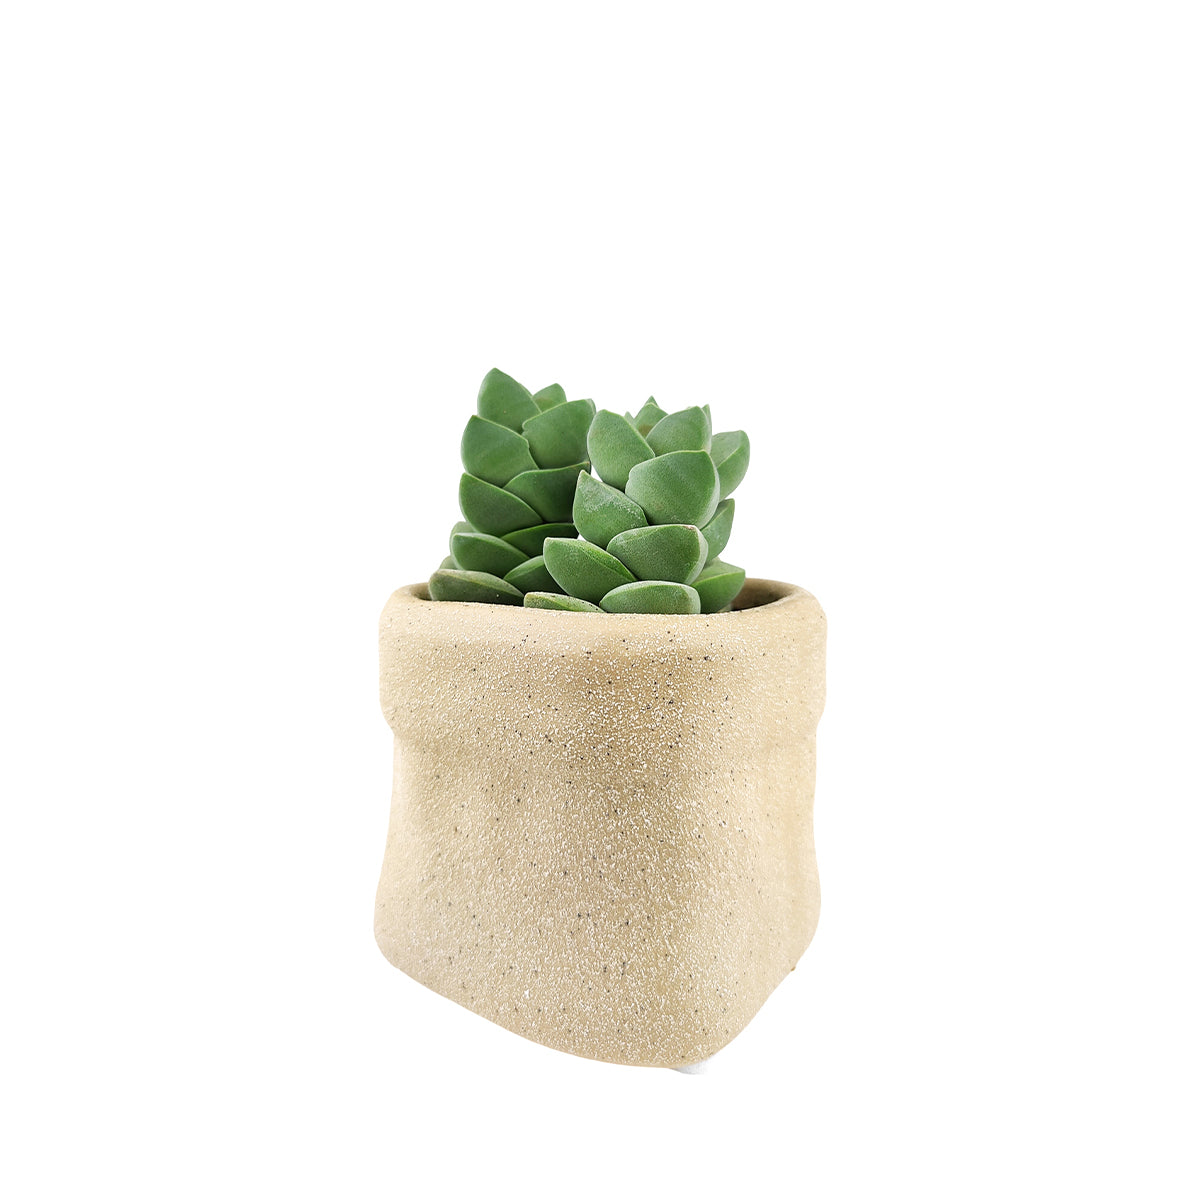 4" Kraft Paper Bag Shape Ceramic Flower & Plant Pot, 4" Ceramic Kraft Paper Bag Houseplant Pot, Beige Ceramic Paper Bag Planter for Home Decor Ideas